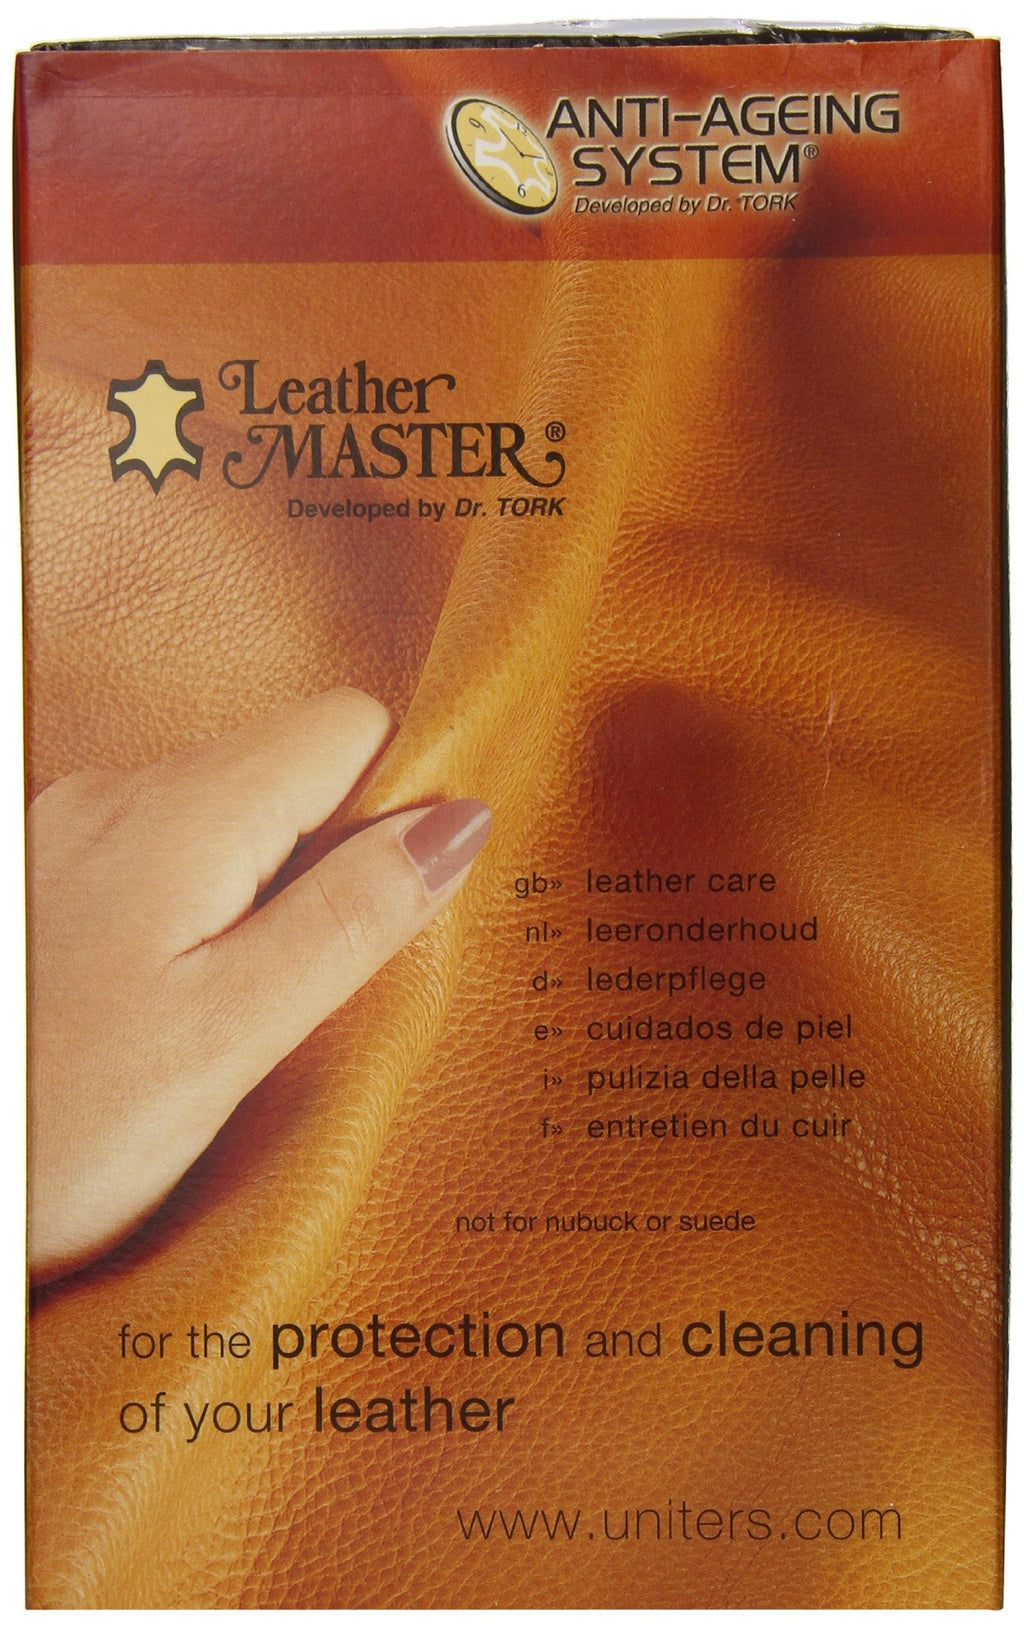  [AUSTRALIA] - Leather Master Leather Care Kit - 150ml